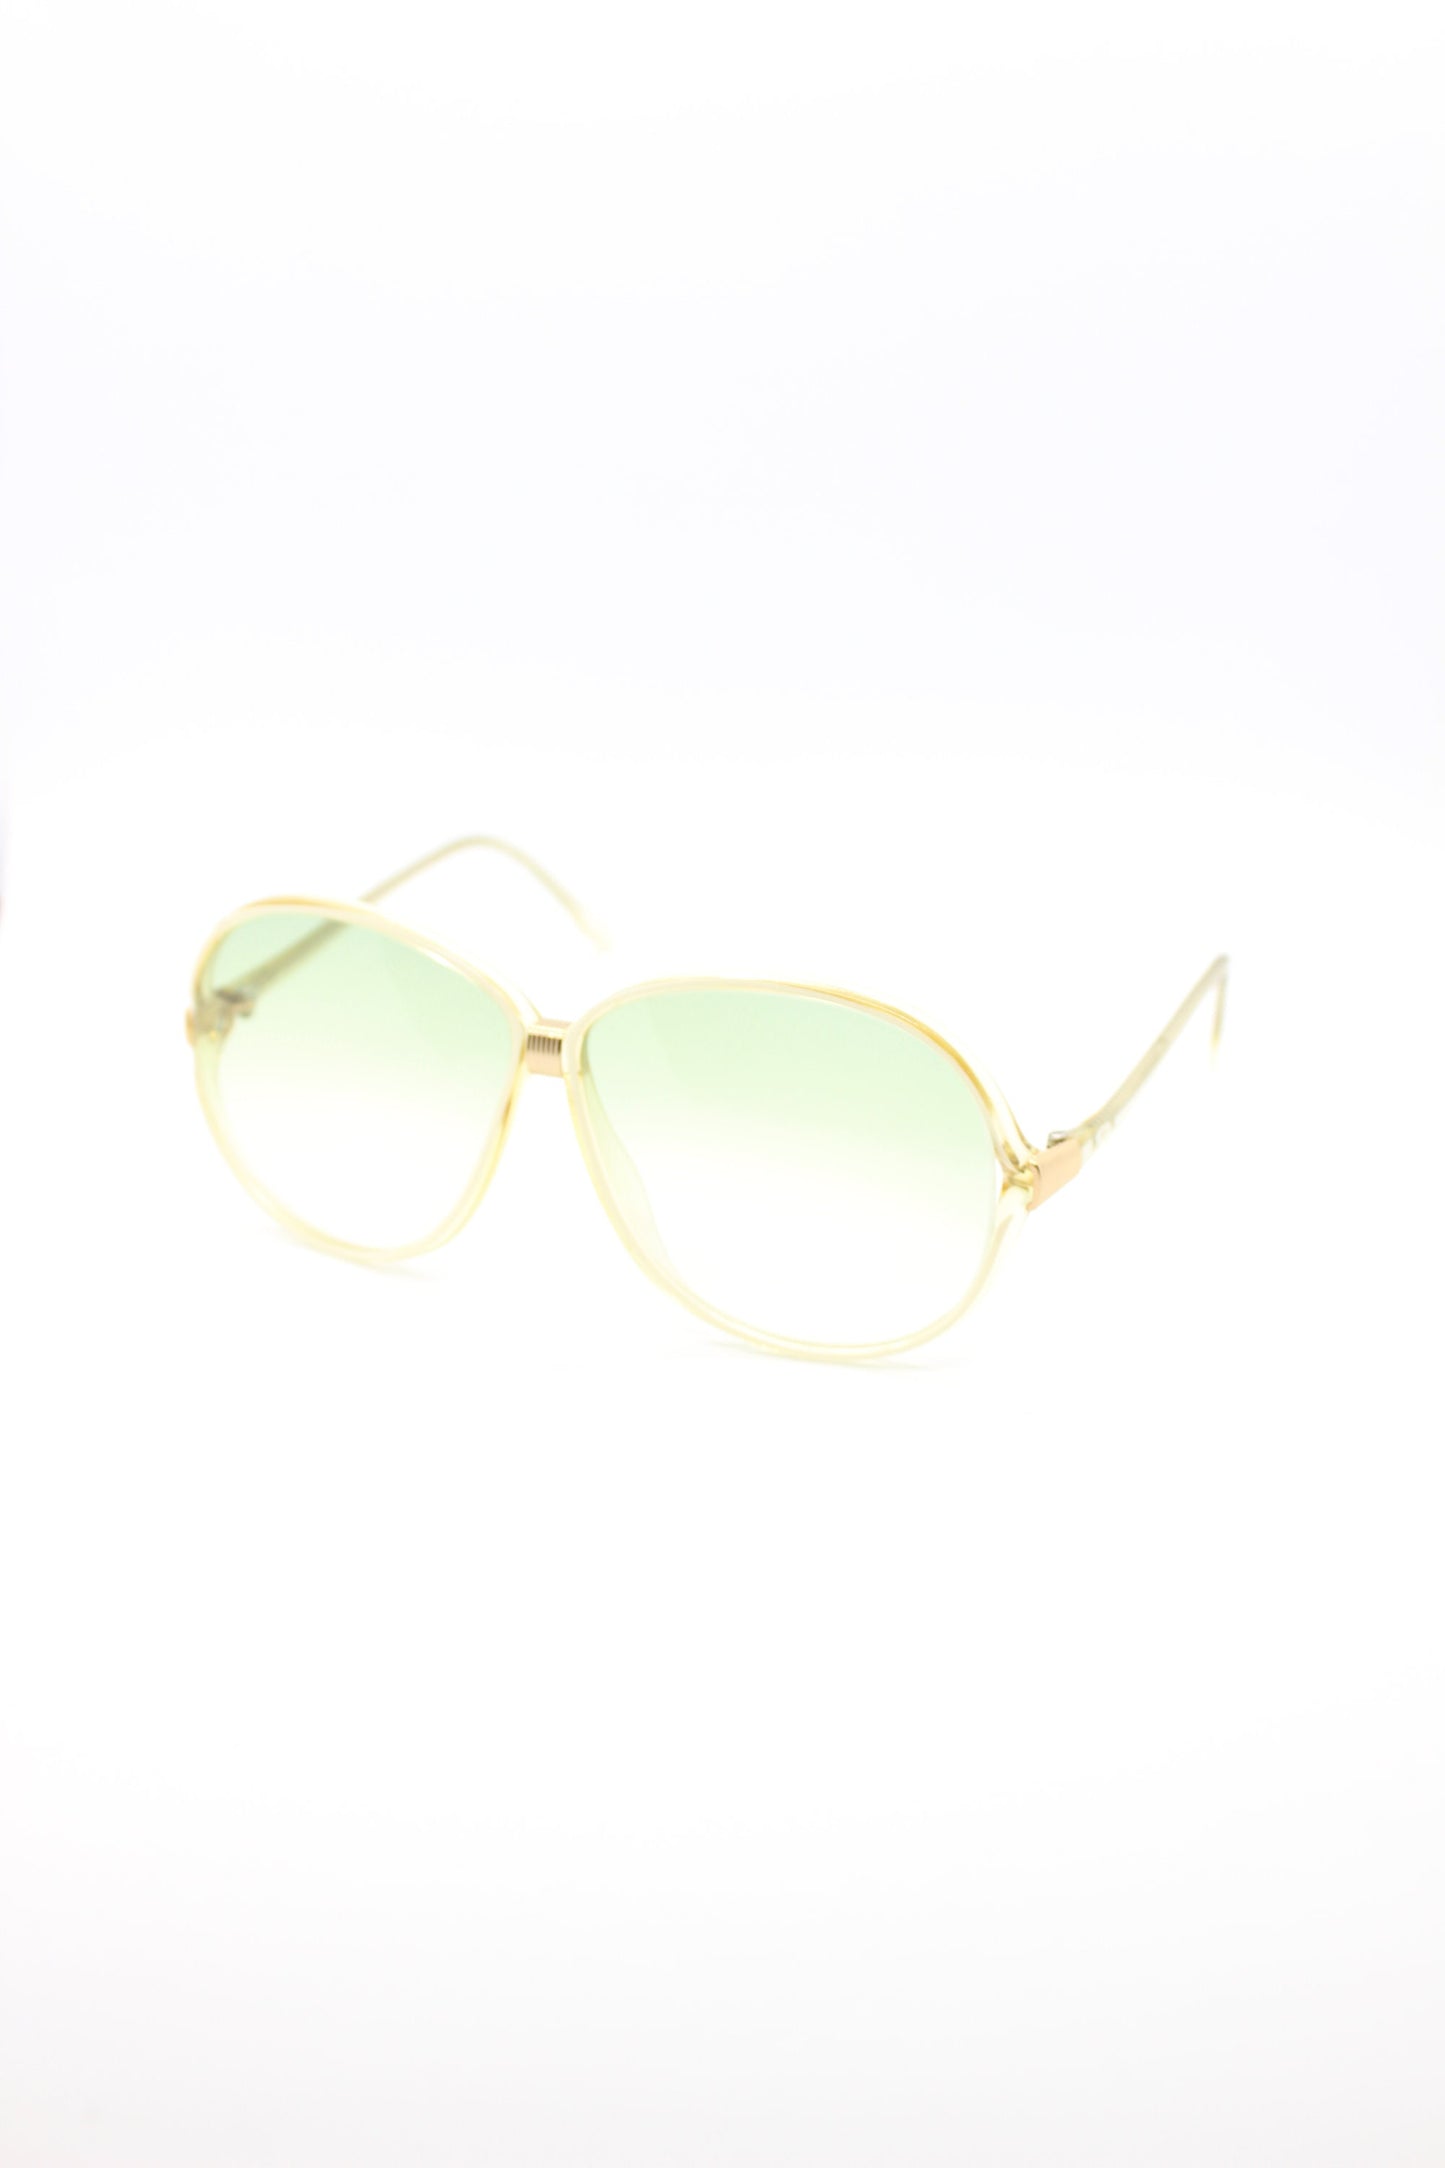 RODENSTOCK "Lady Line" Vintage Sunglasses (New Deadstock never worn)